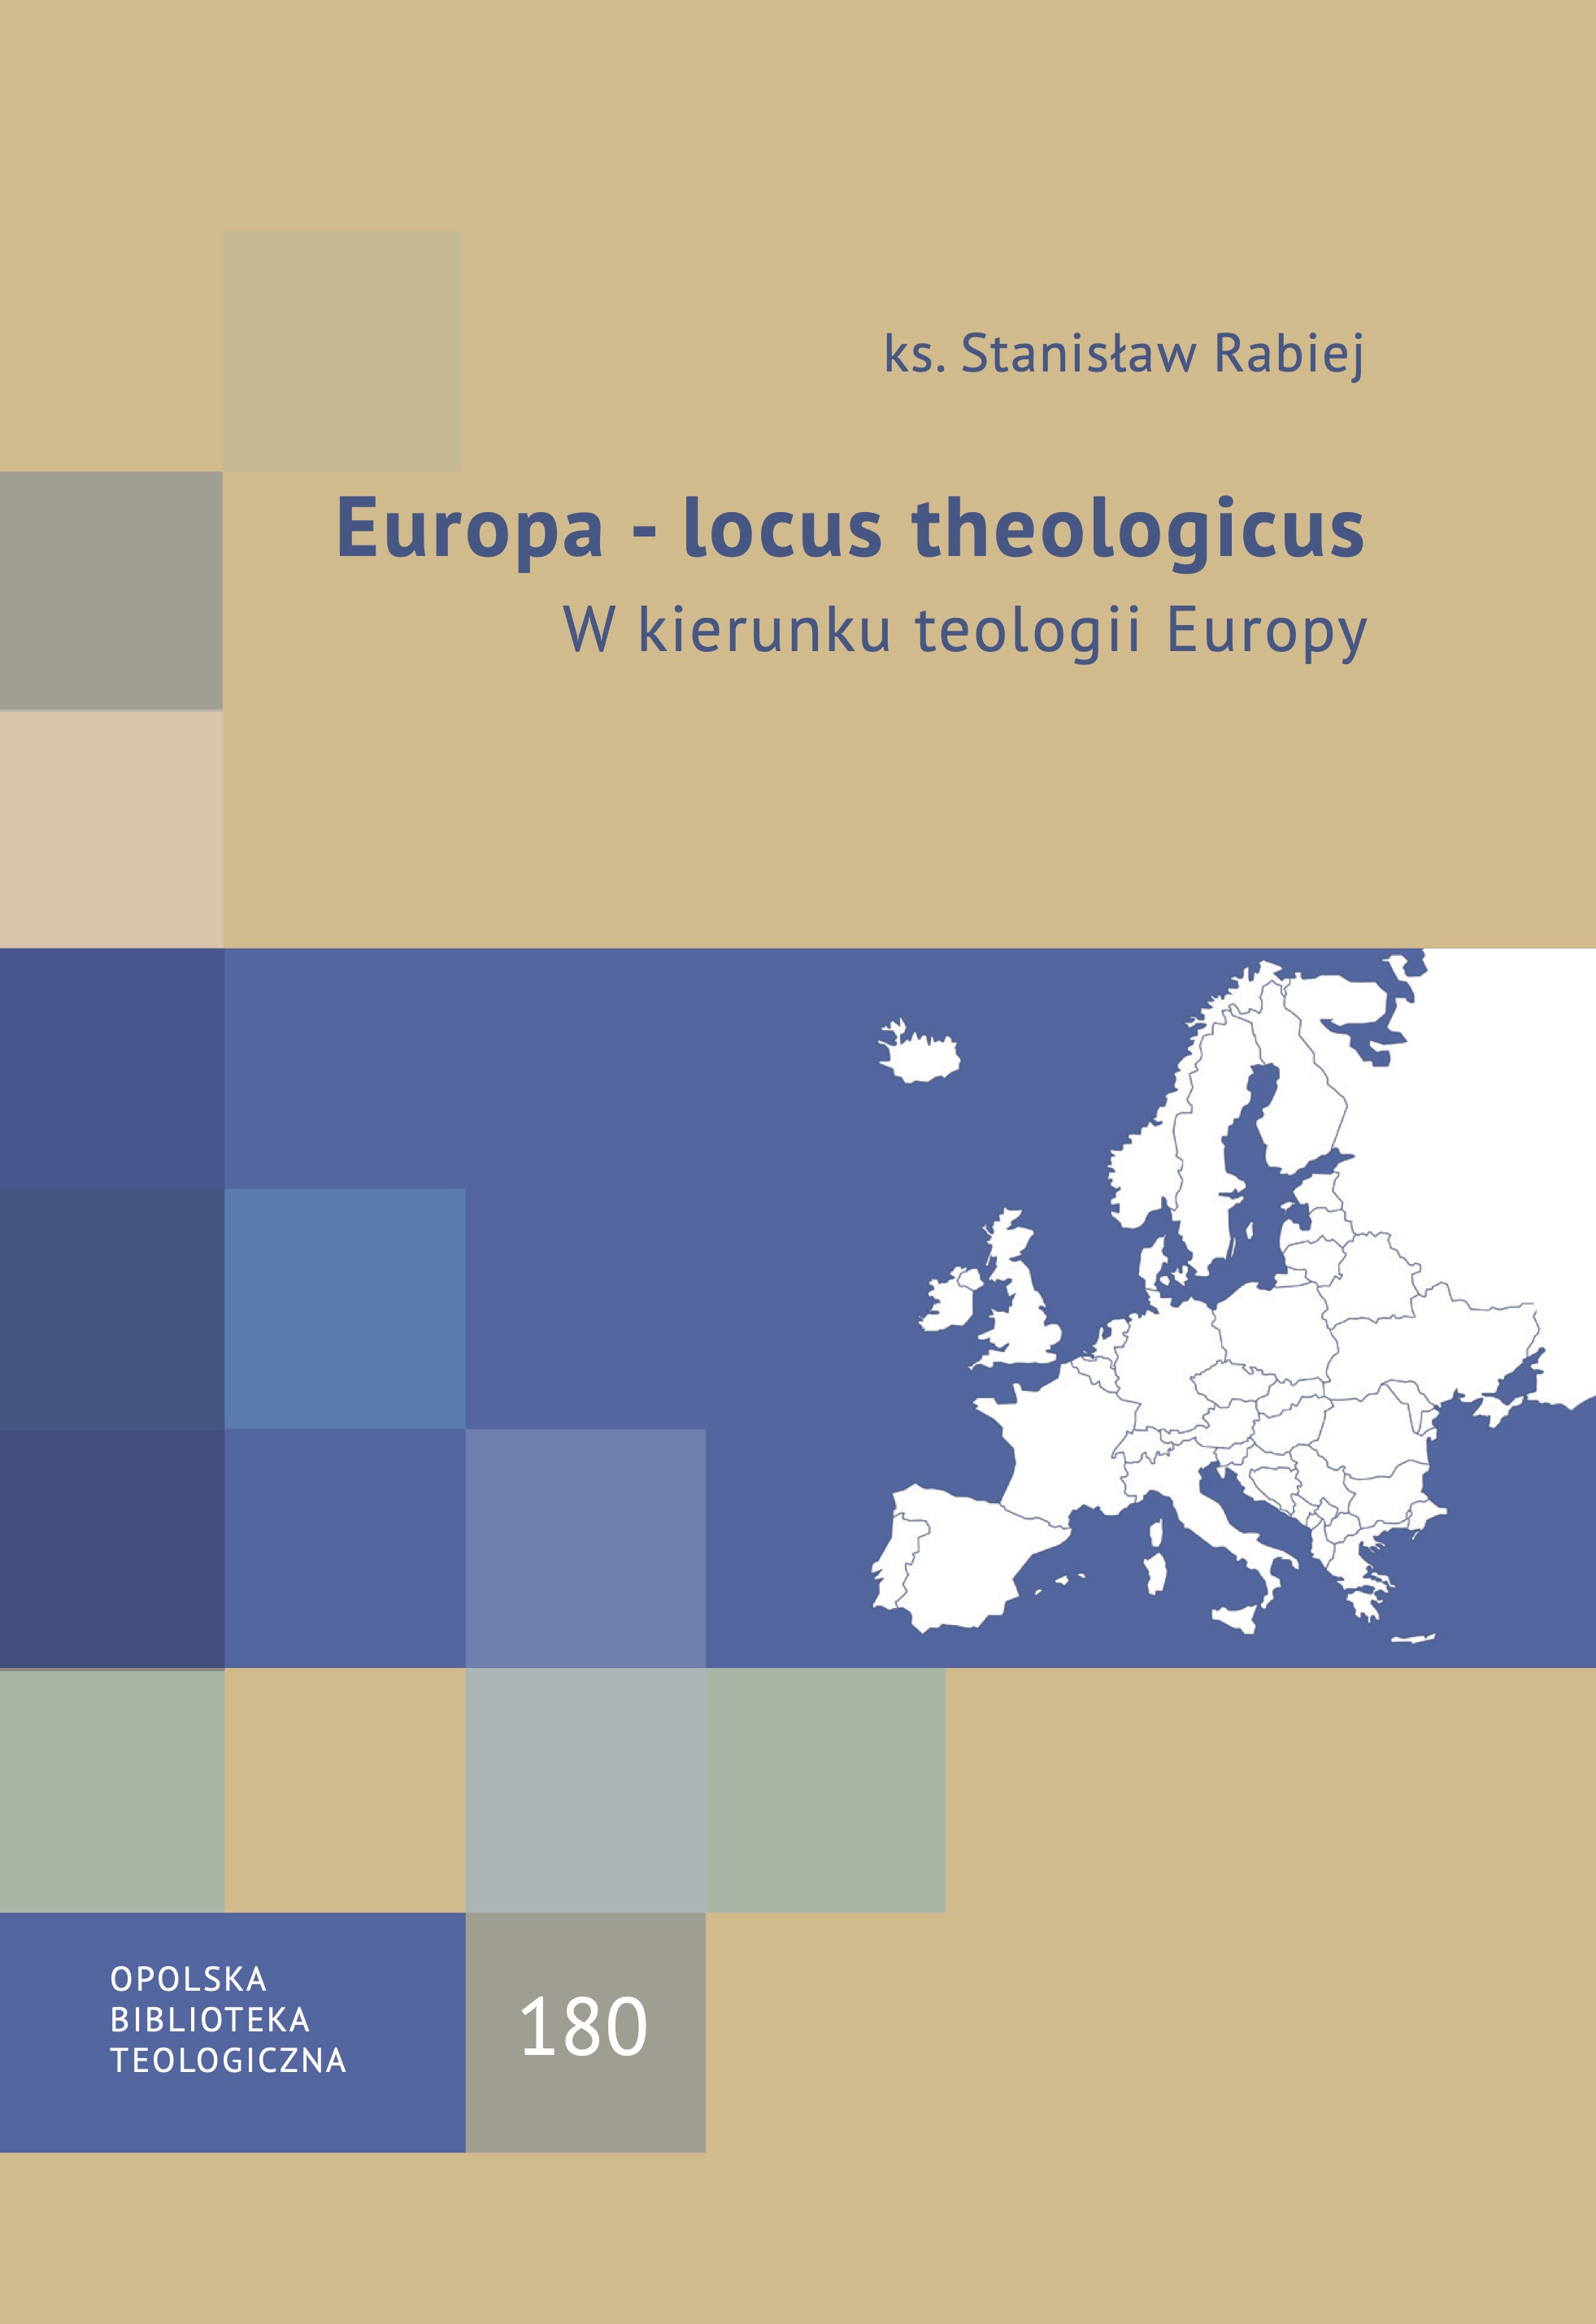 Book Cover: Europa – locus theologicus. W kierunku teologii Europy